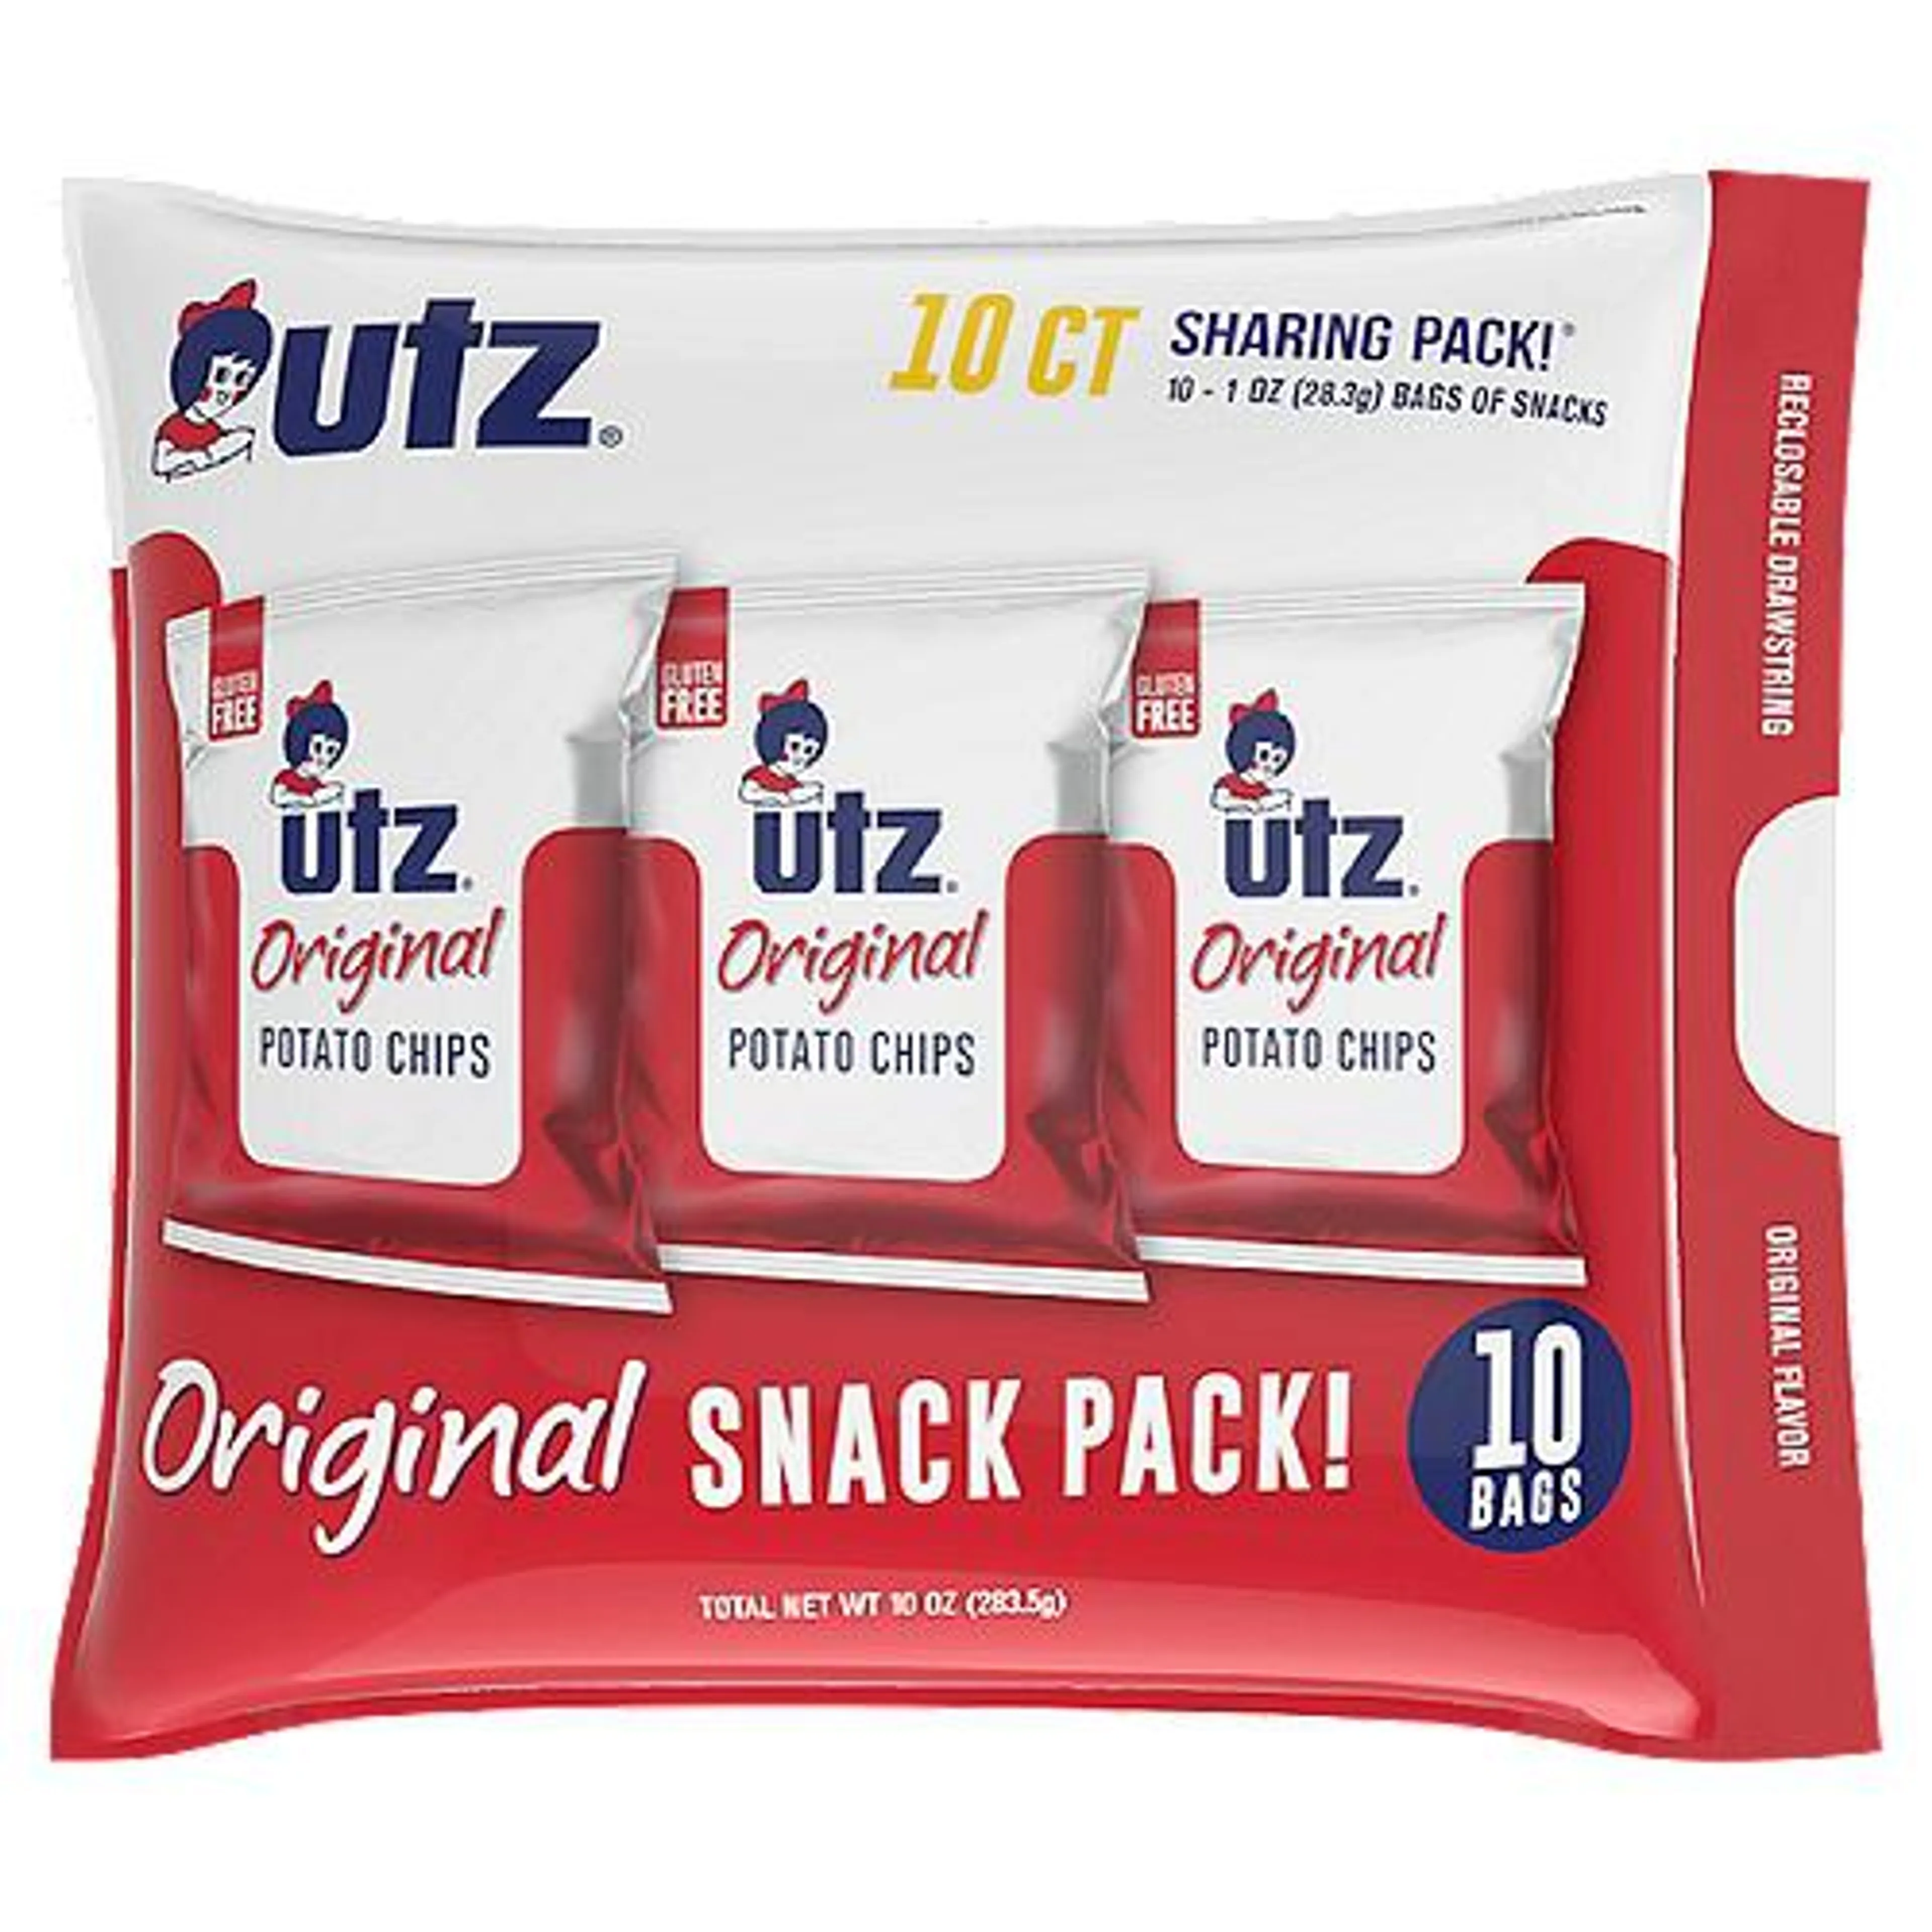 10 oz Utz Original Snack Pack 10 Pack